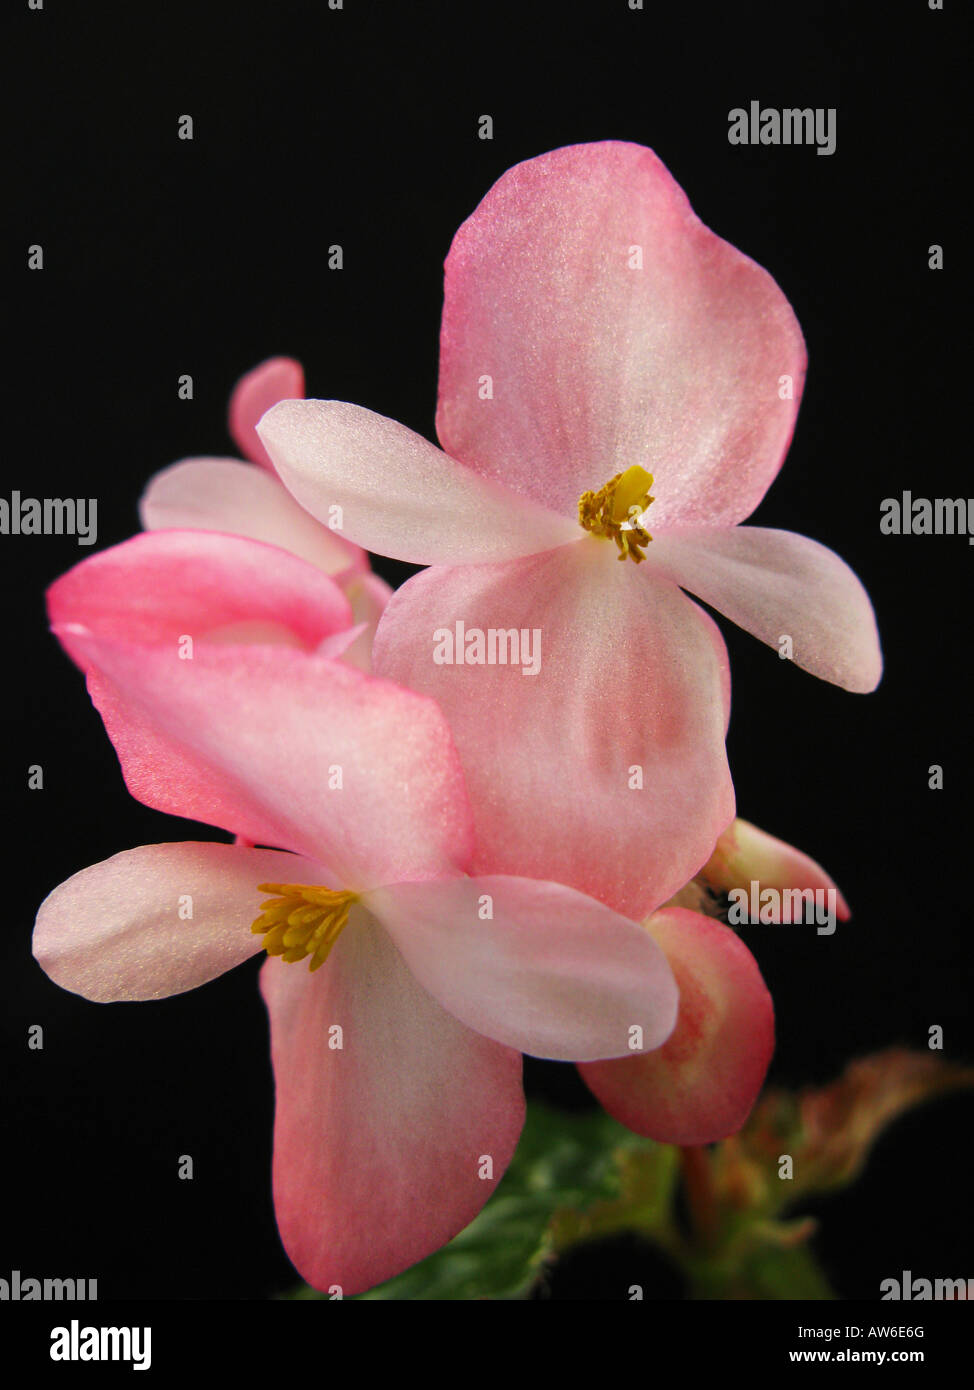 Begonia close up Stock Photo